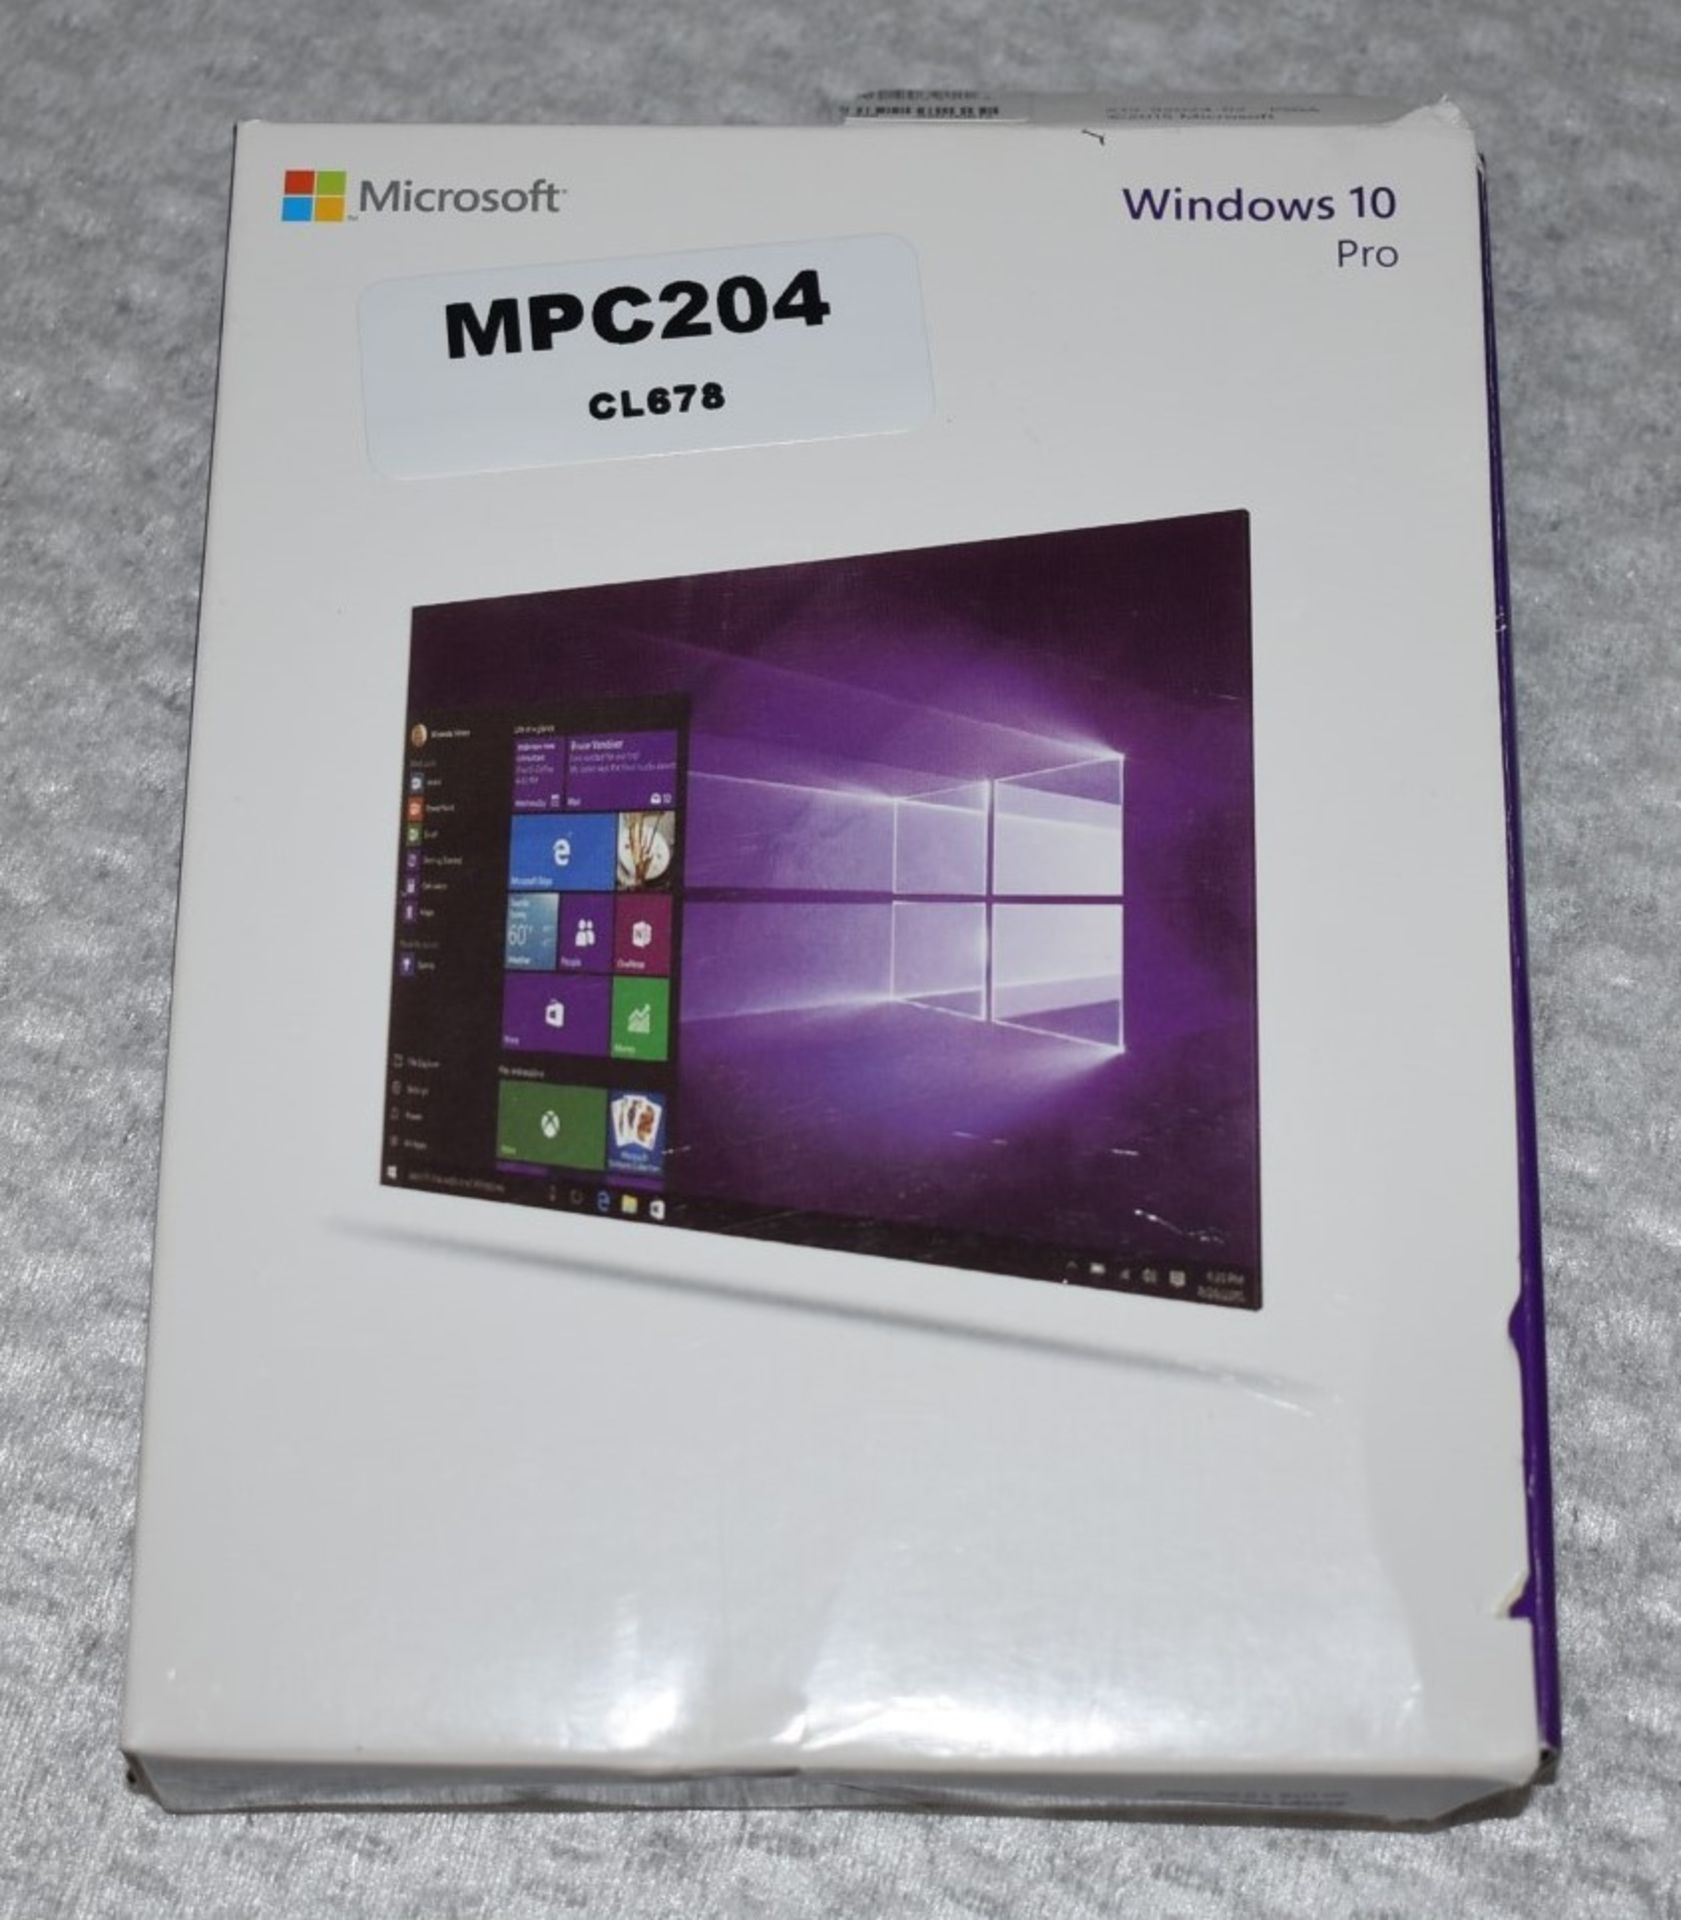 1 x Microsoft Windows 10 Pro Activation Key Card With Original Box - Ref: MPC204 P1 - CL678 -